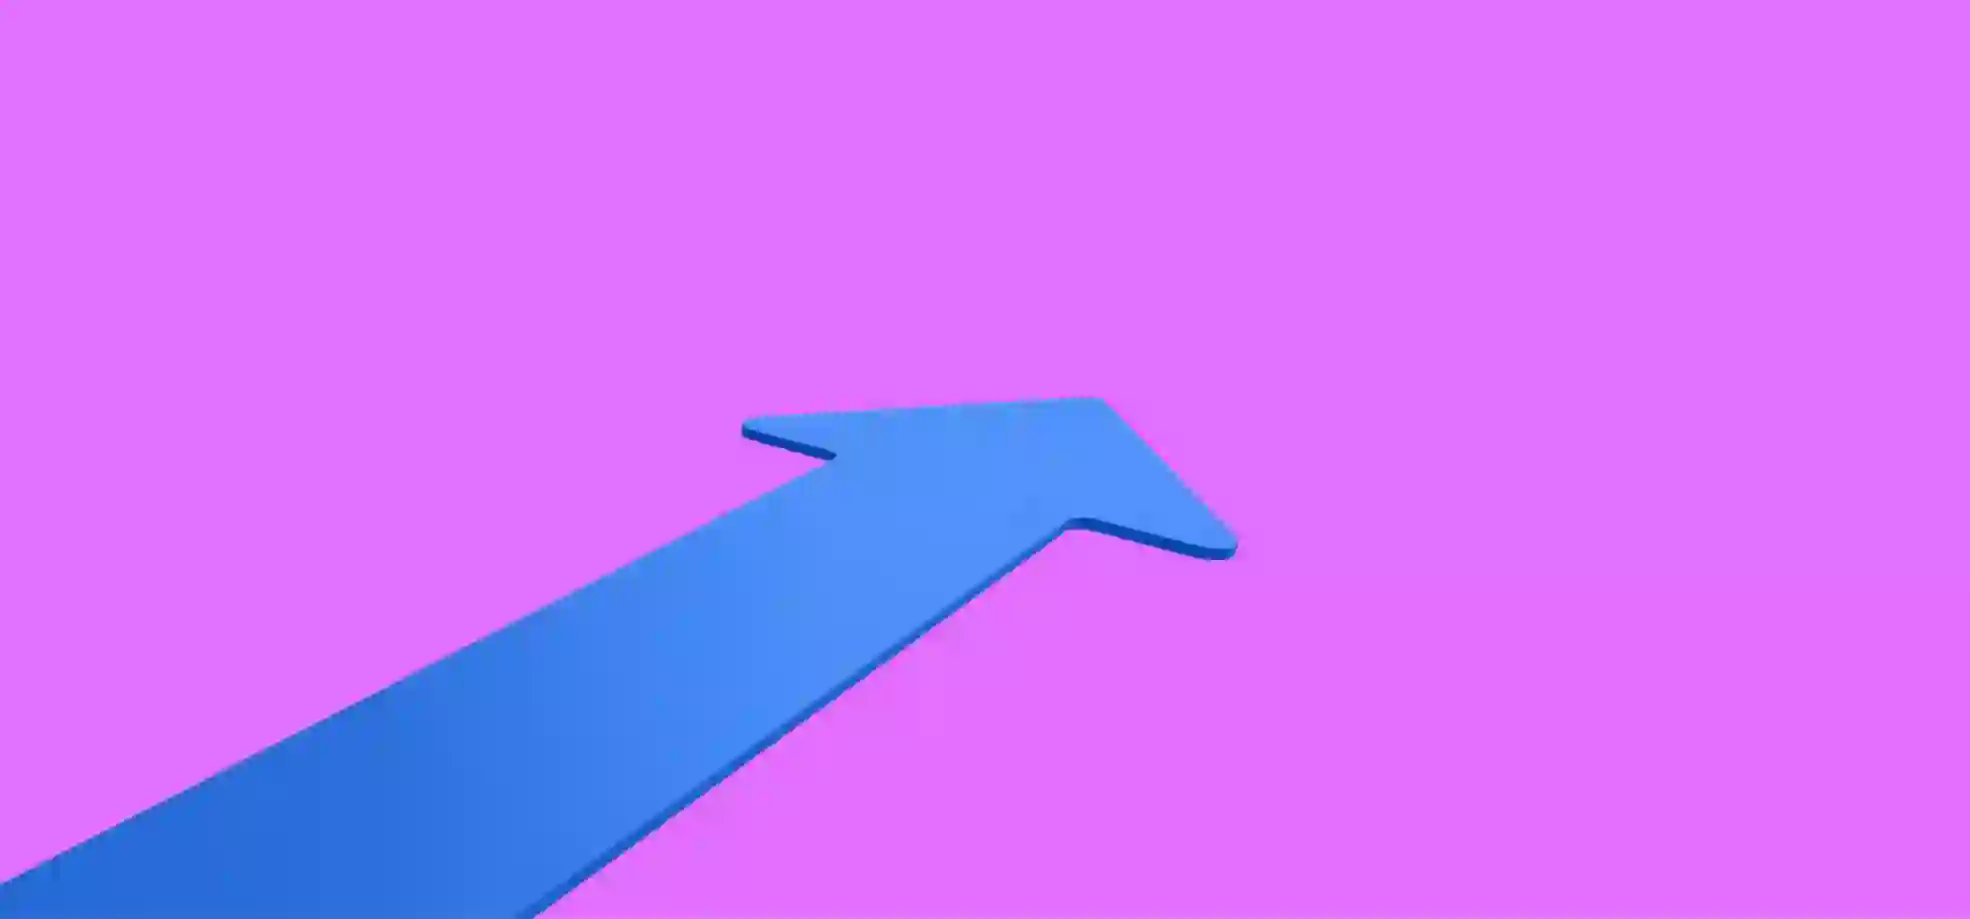 a wide blue arrow on purple background